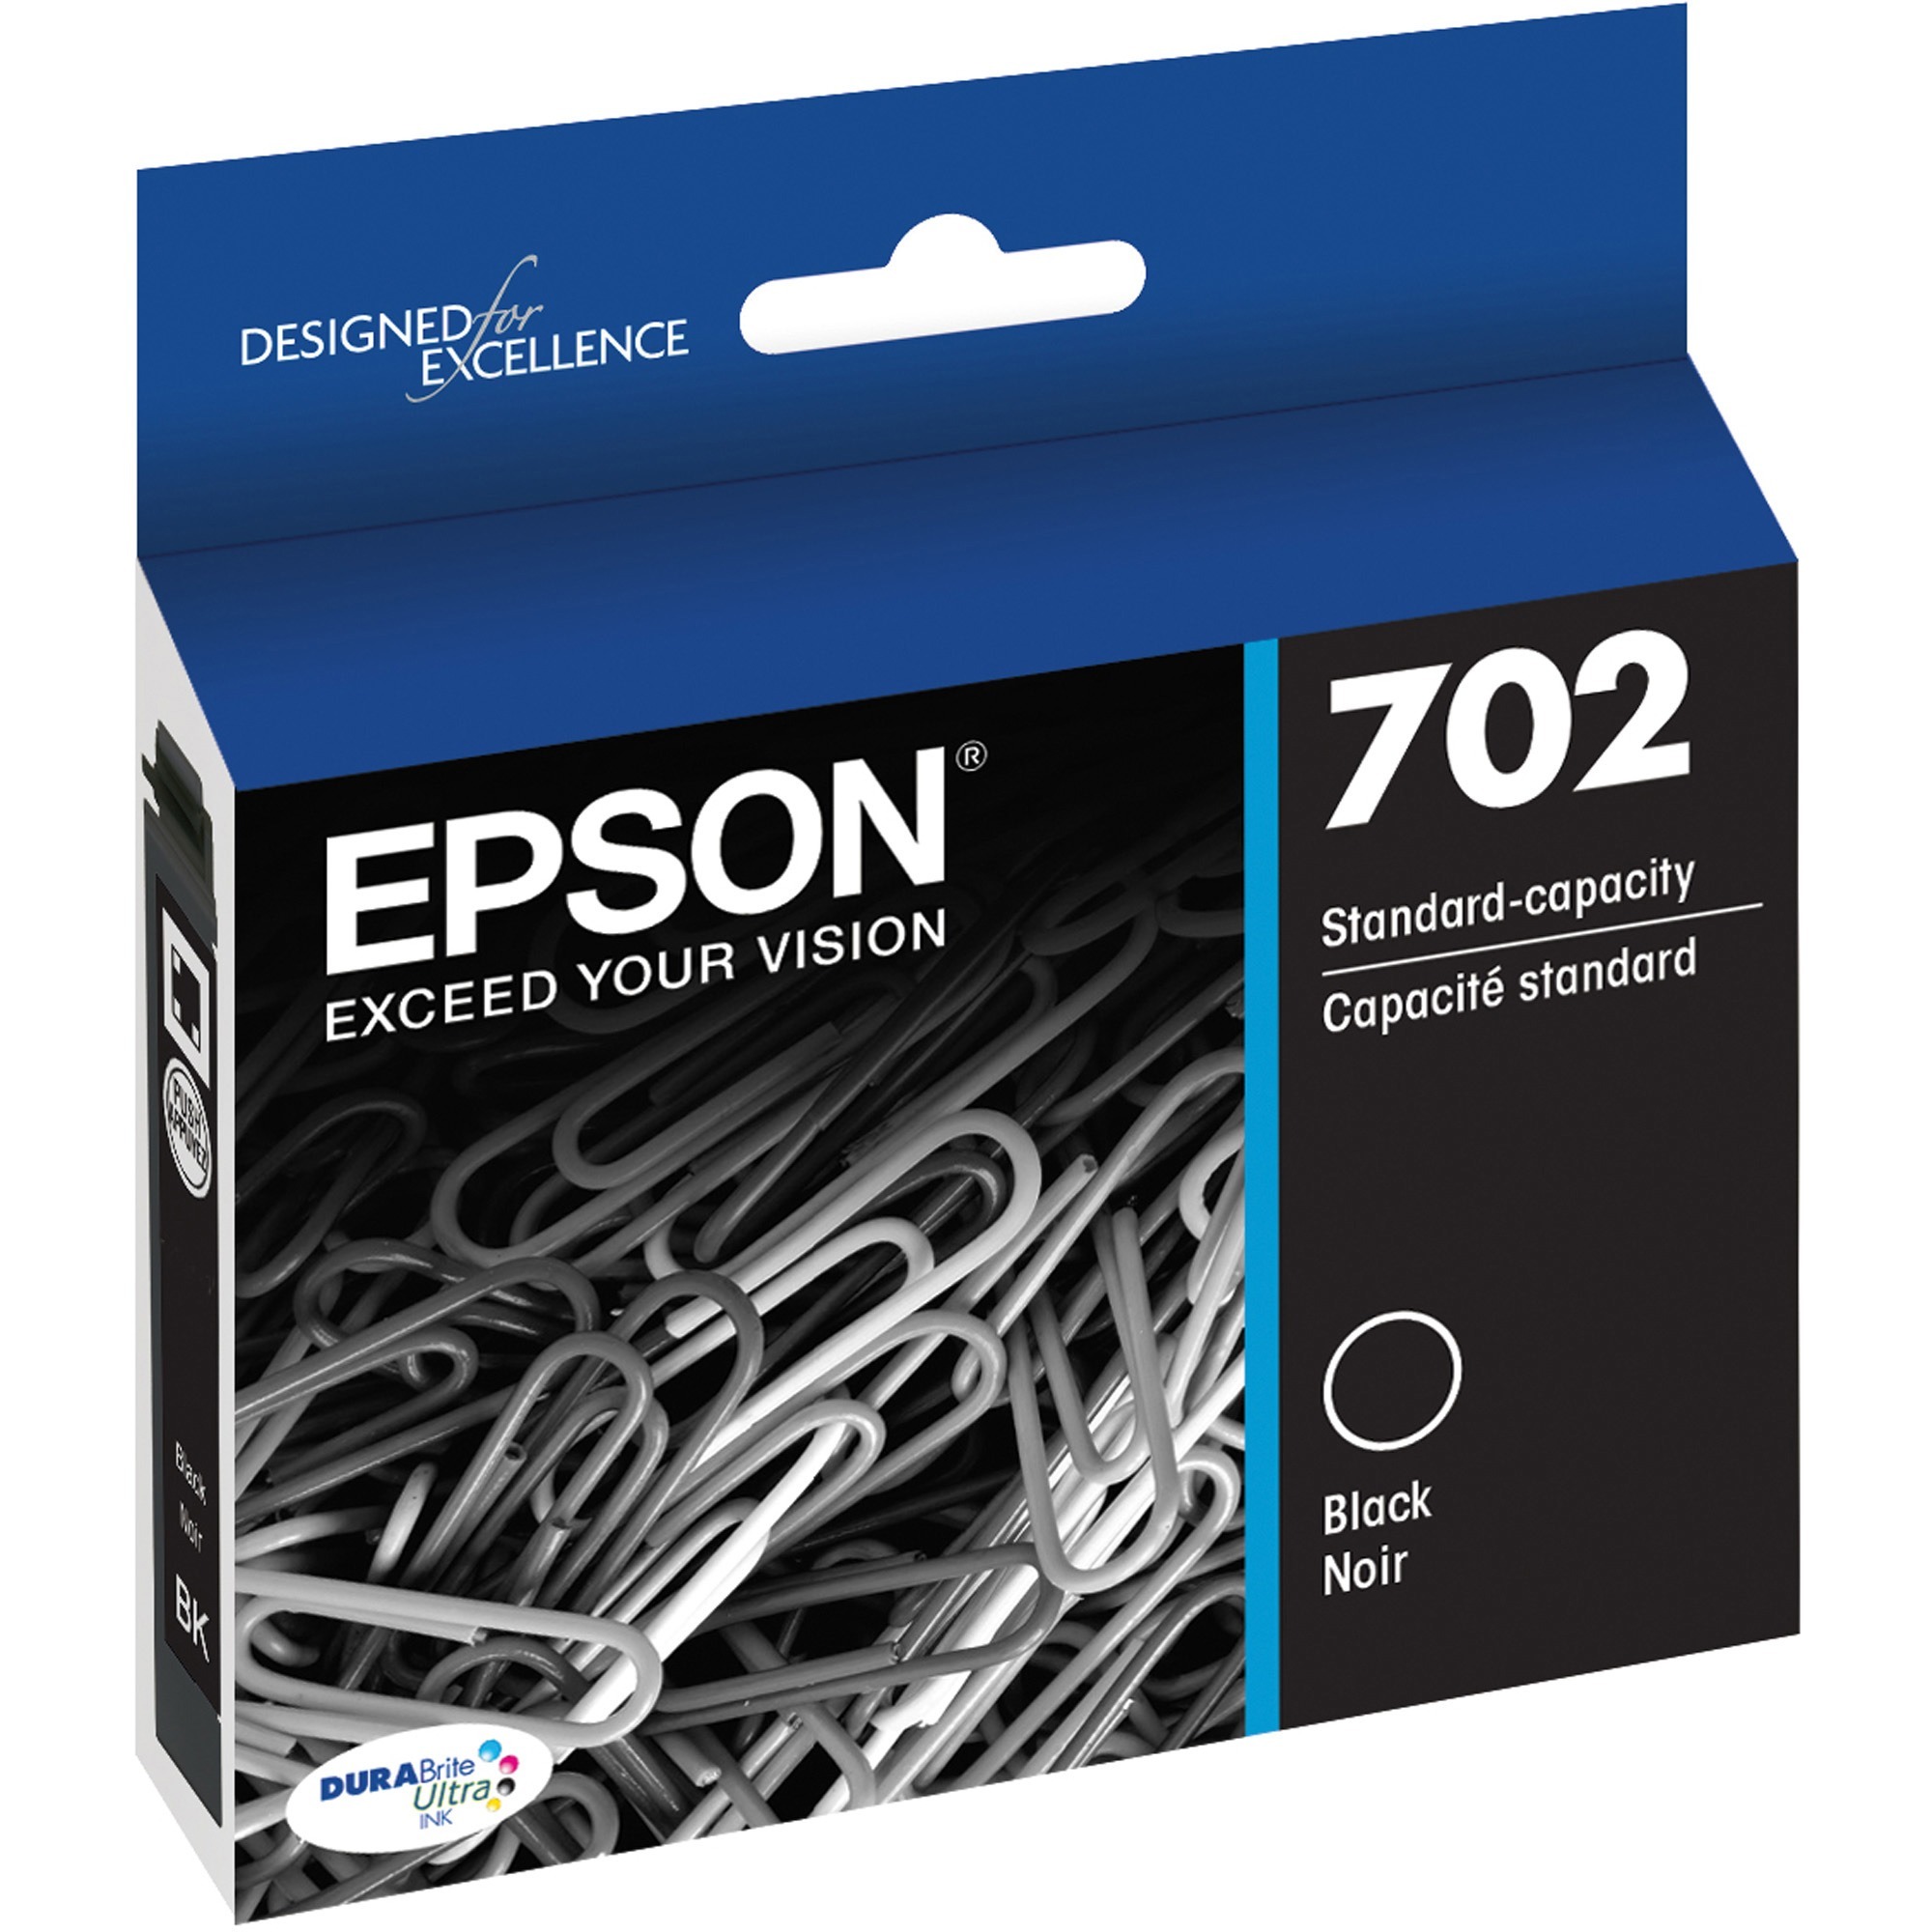 Epson Durabrite Ultra T702 Original Standard Yield Inkjet Ink Cartridge Black 1 Each 5737